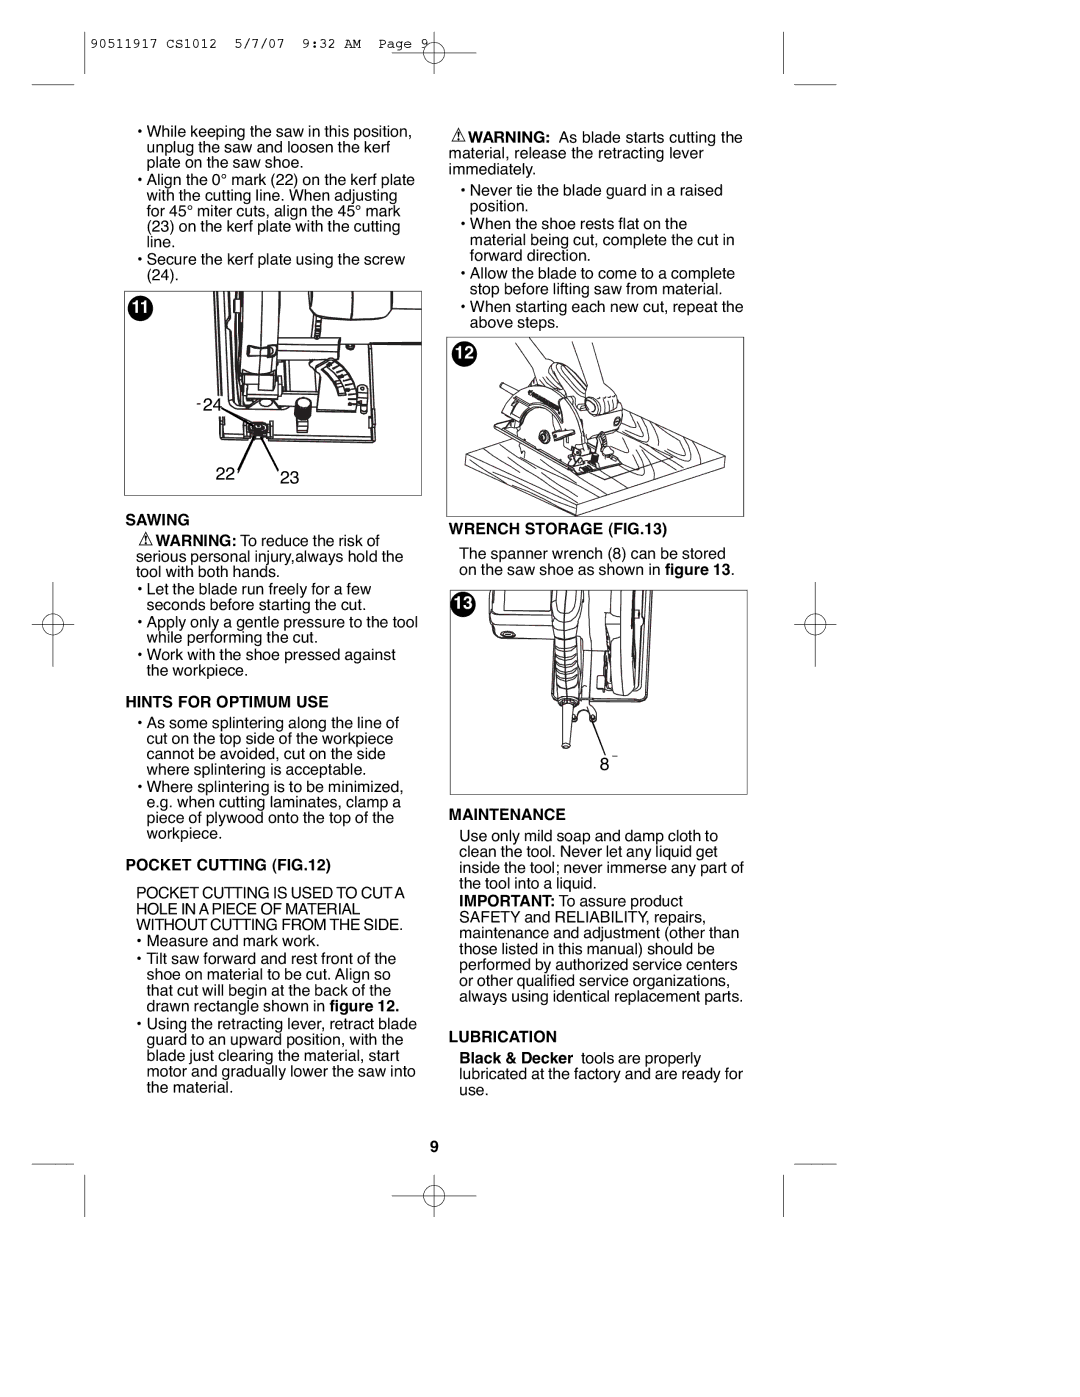 Black & Decker CS1012 Sawing, Hints for Optimum USE, Pocket Cutting, Wrench Storage, Maintenance, Lubrication 